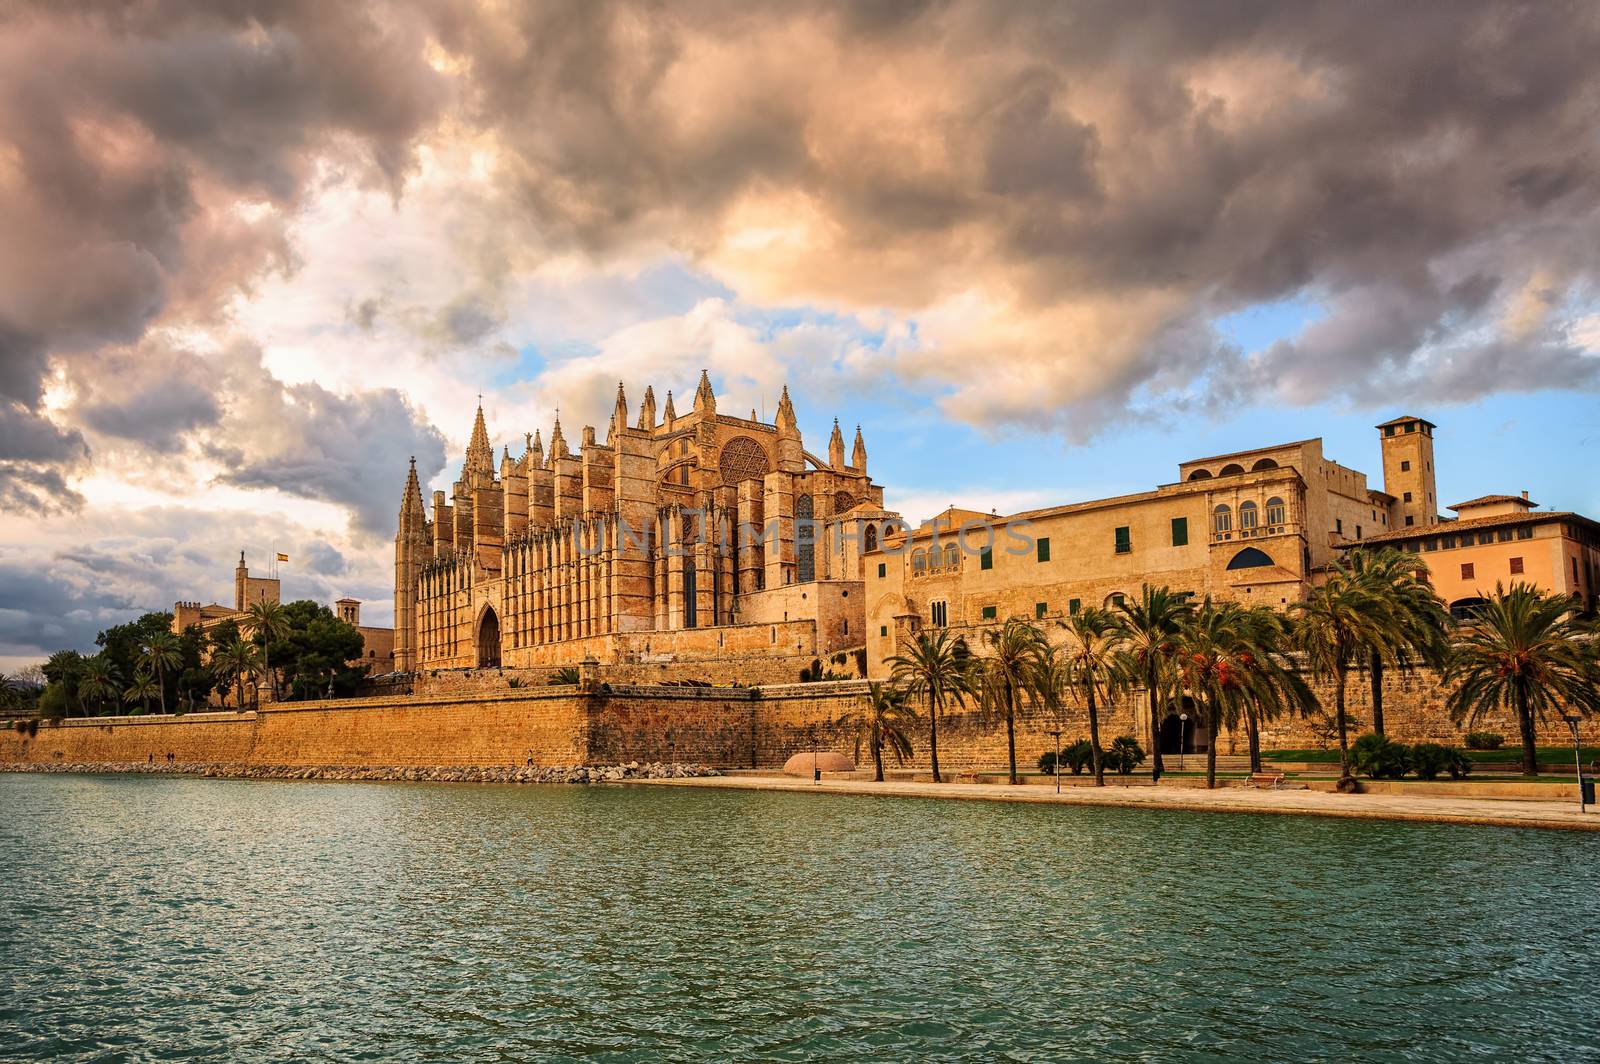 Cathedral of Palma de Mallorca, Spain by GlobePhotos